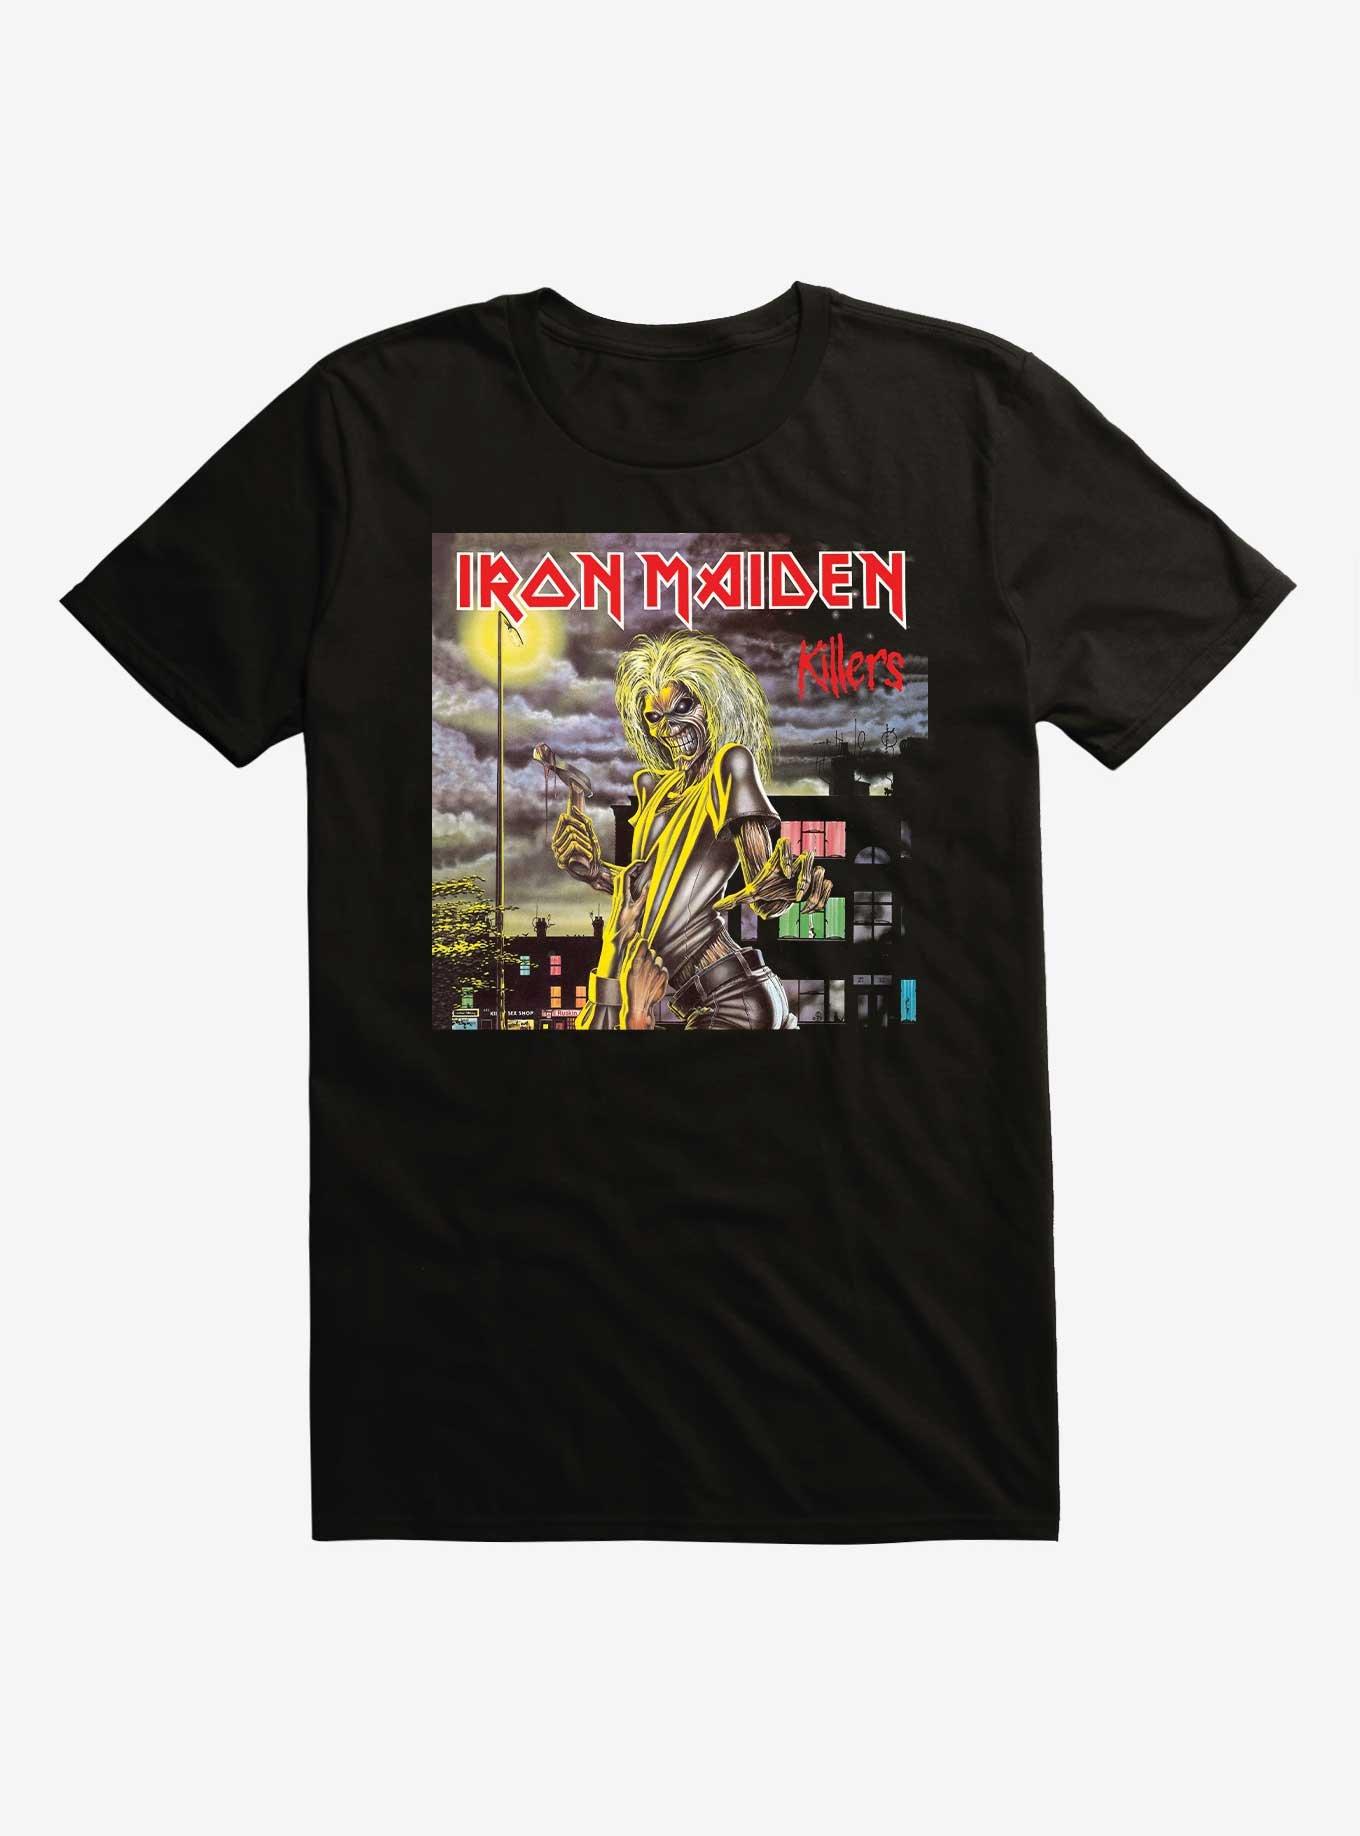 Killers Album Art Shirt - Iron Maiden